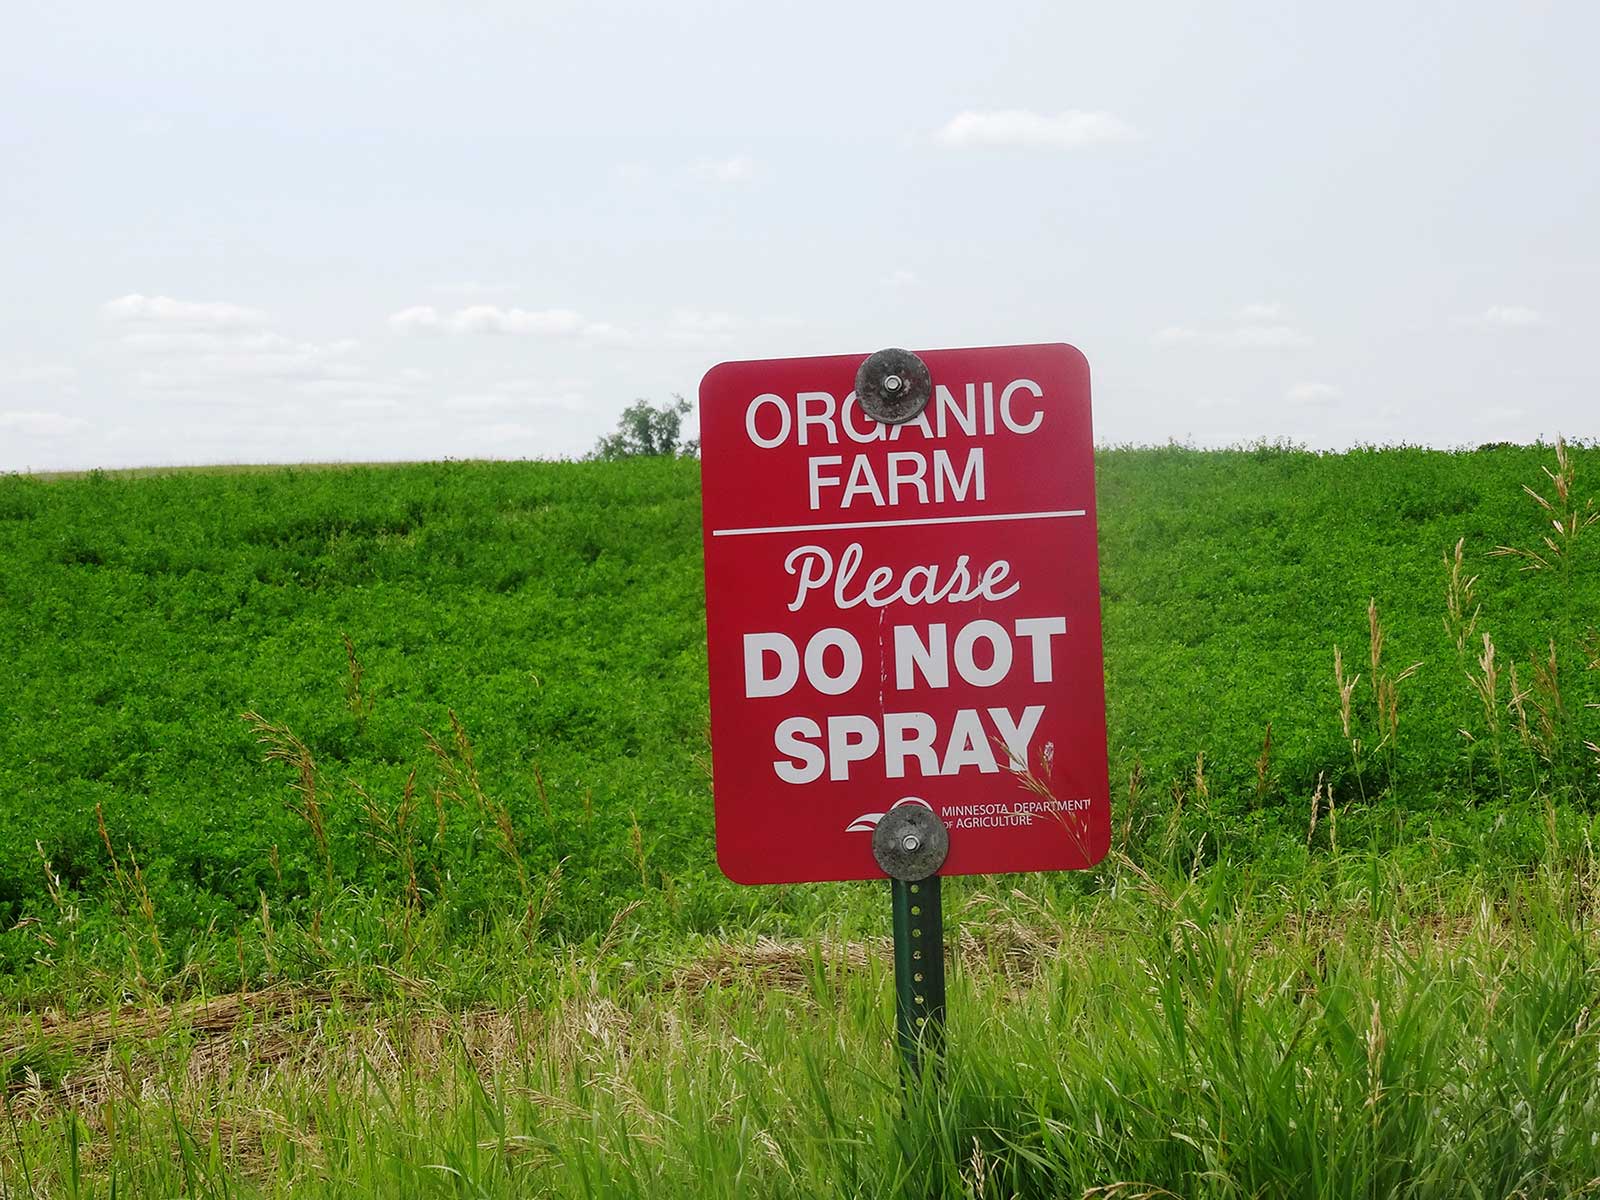 Do Not Spray Organic Farm sign